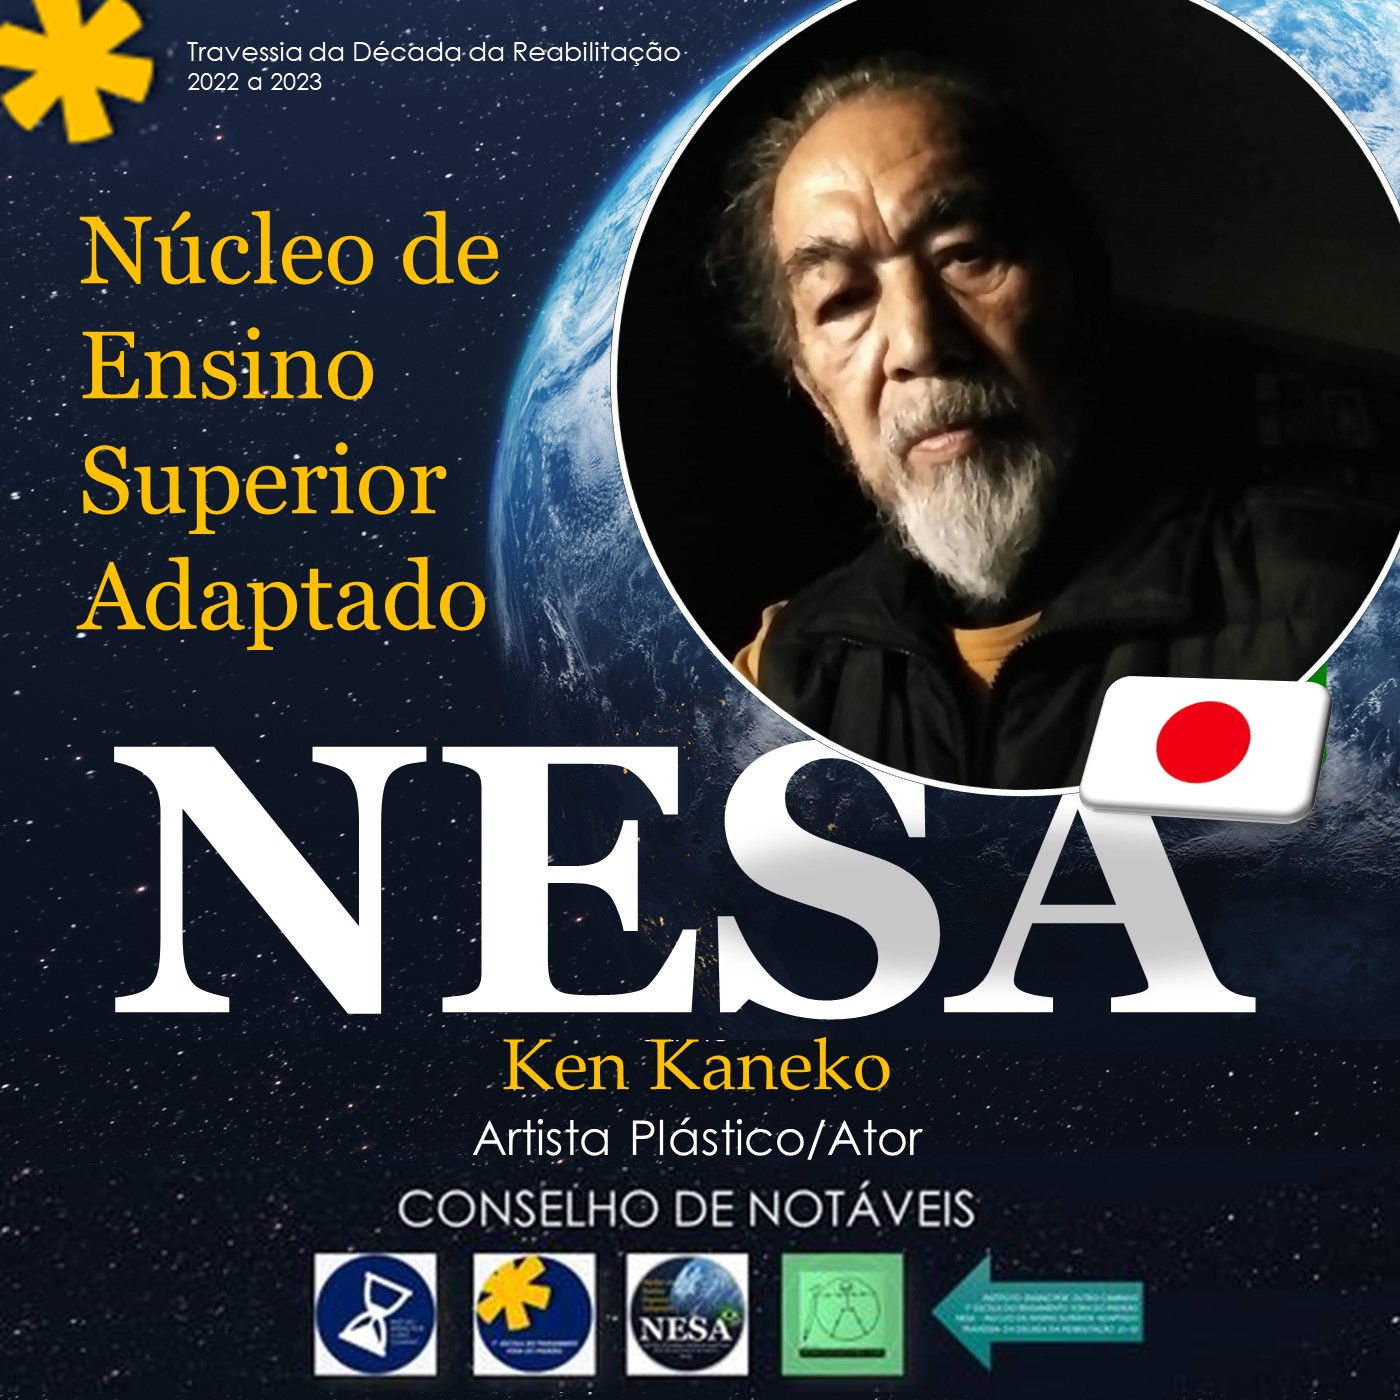 Ken Keneko